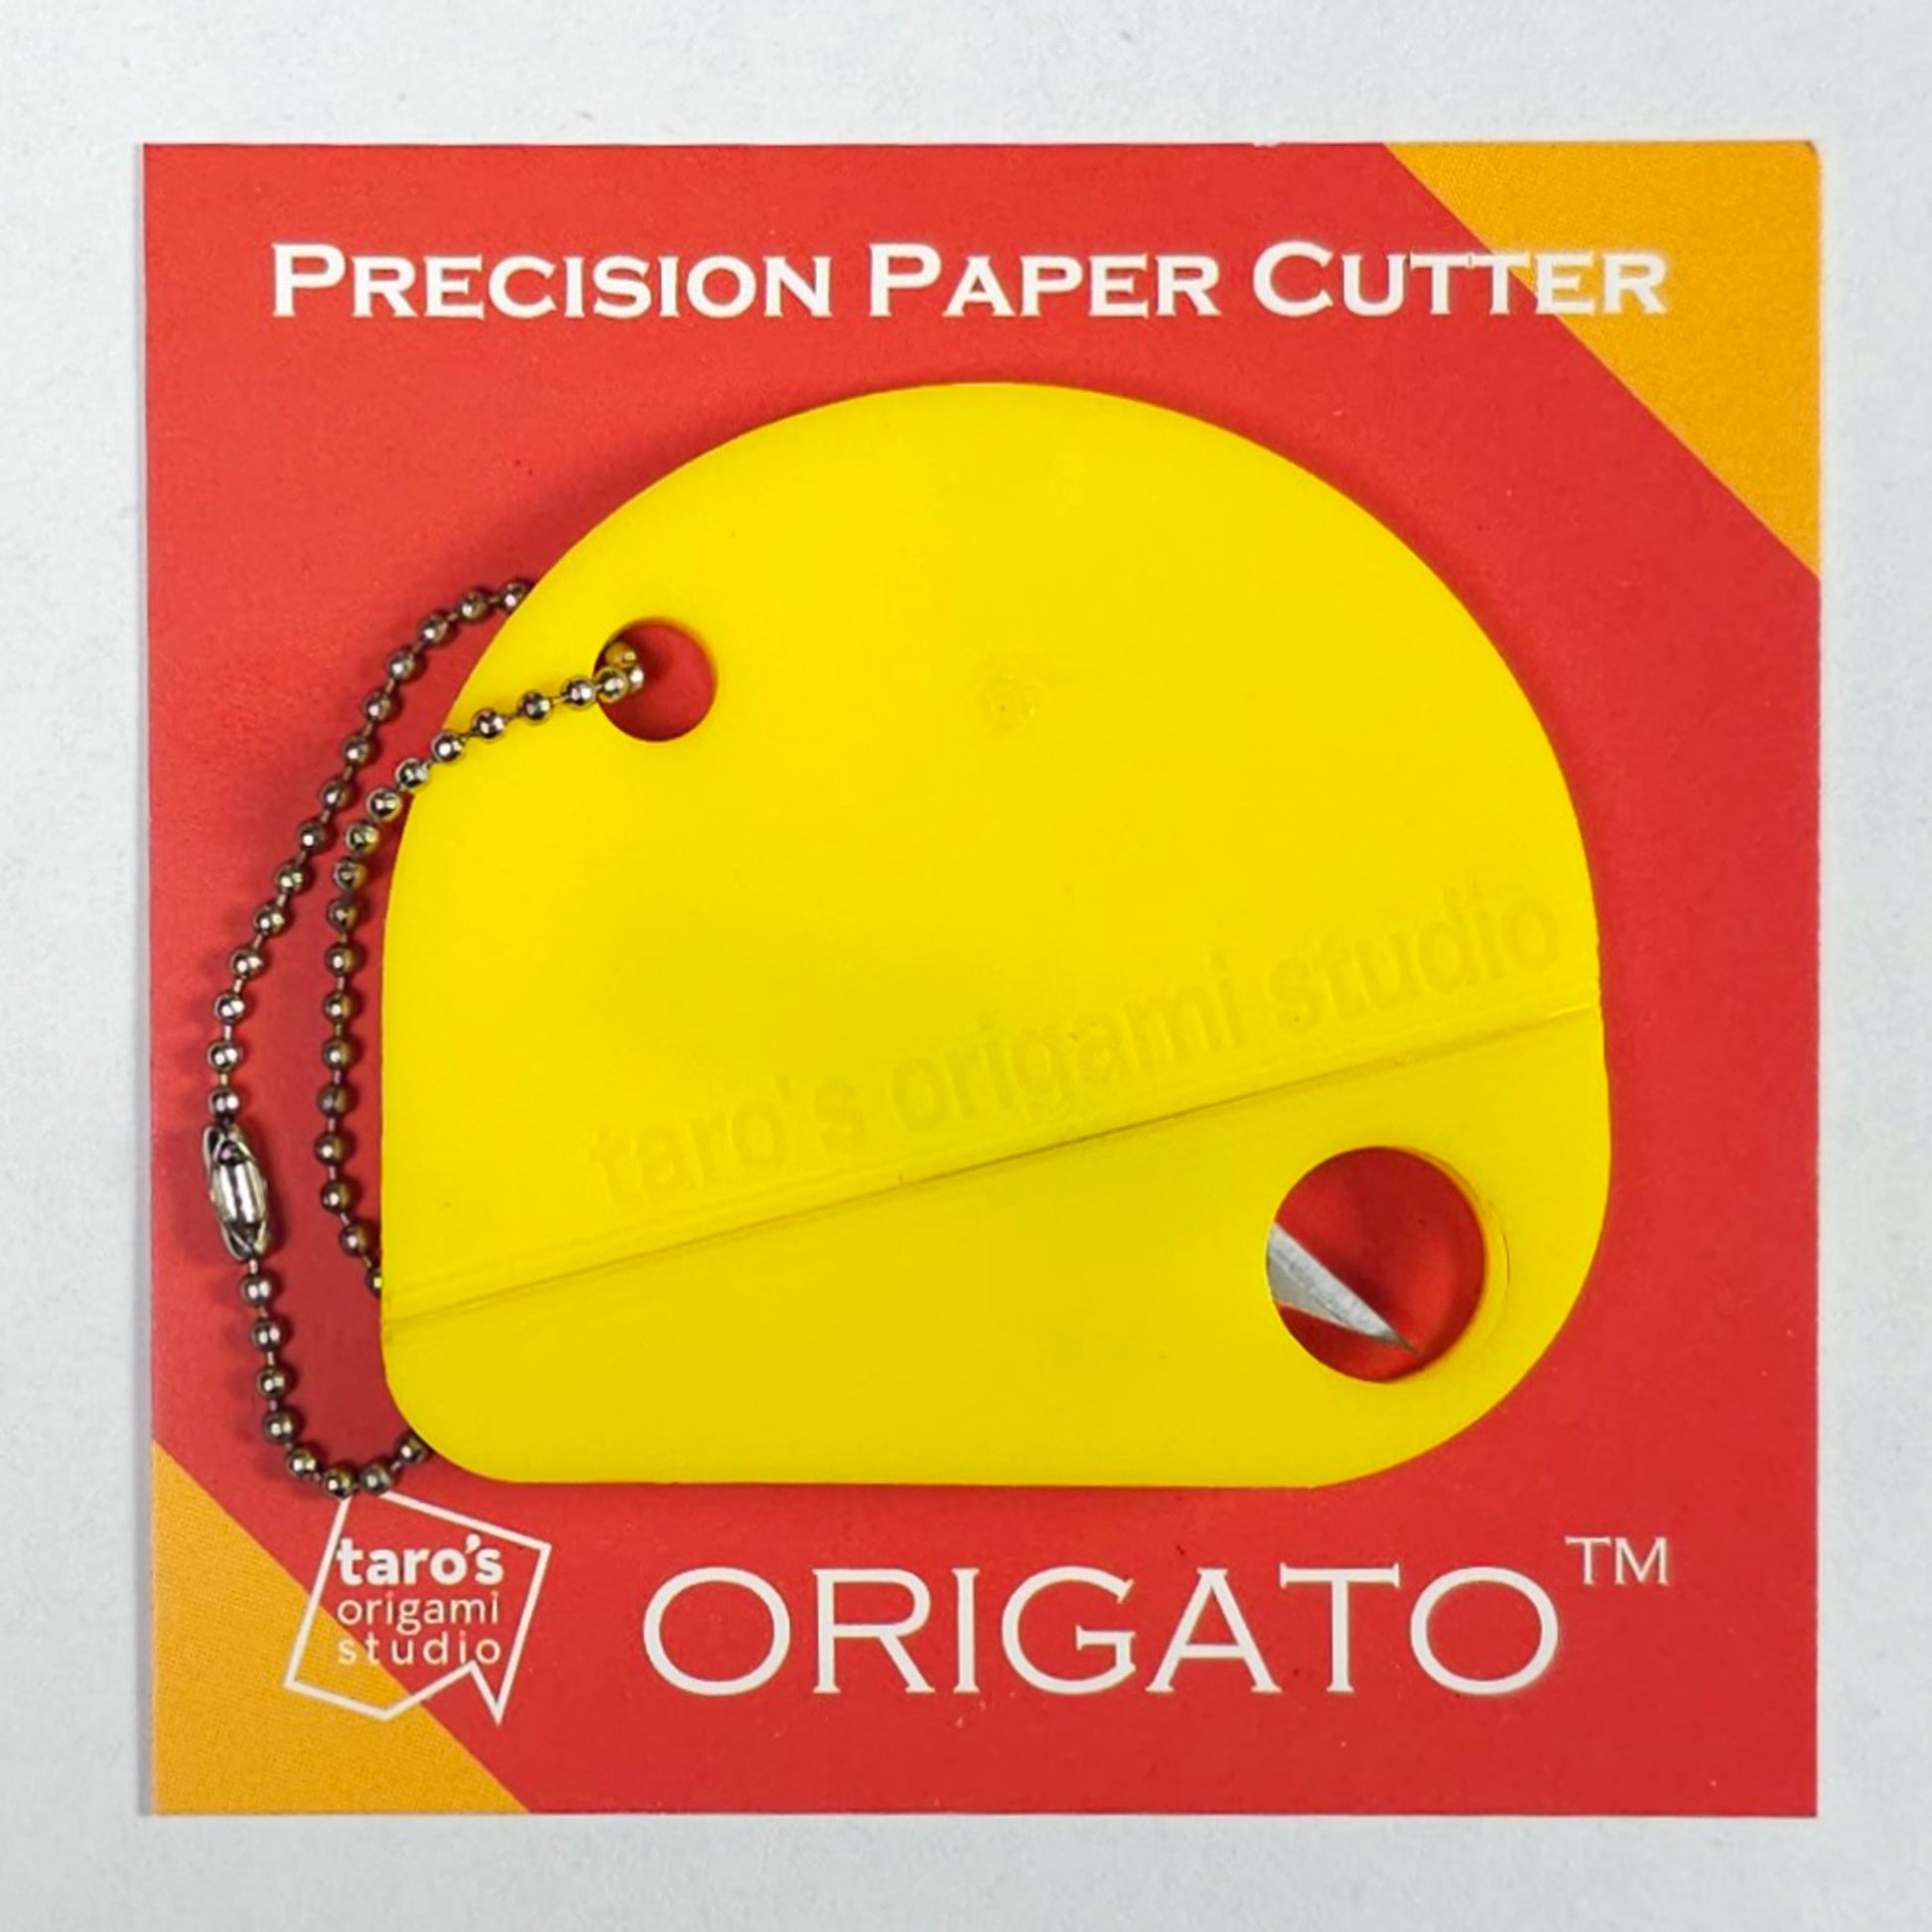 Origami Worldwide + Large Paper Combo – Taro's Origami Studio Store